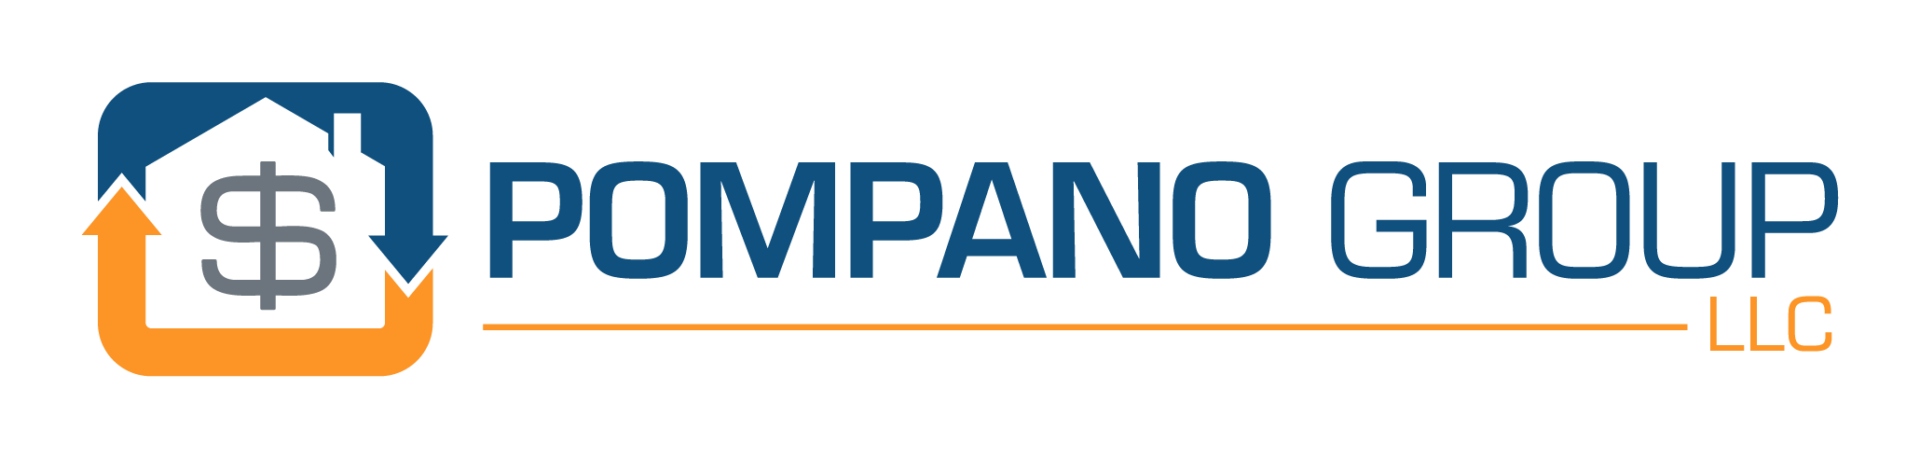 Pompano Group LLC logo